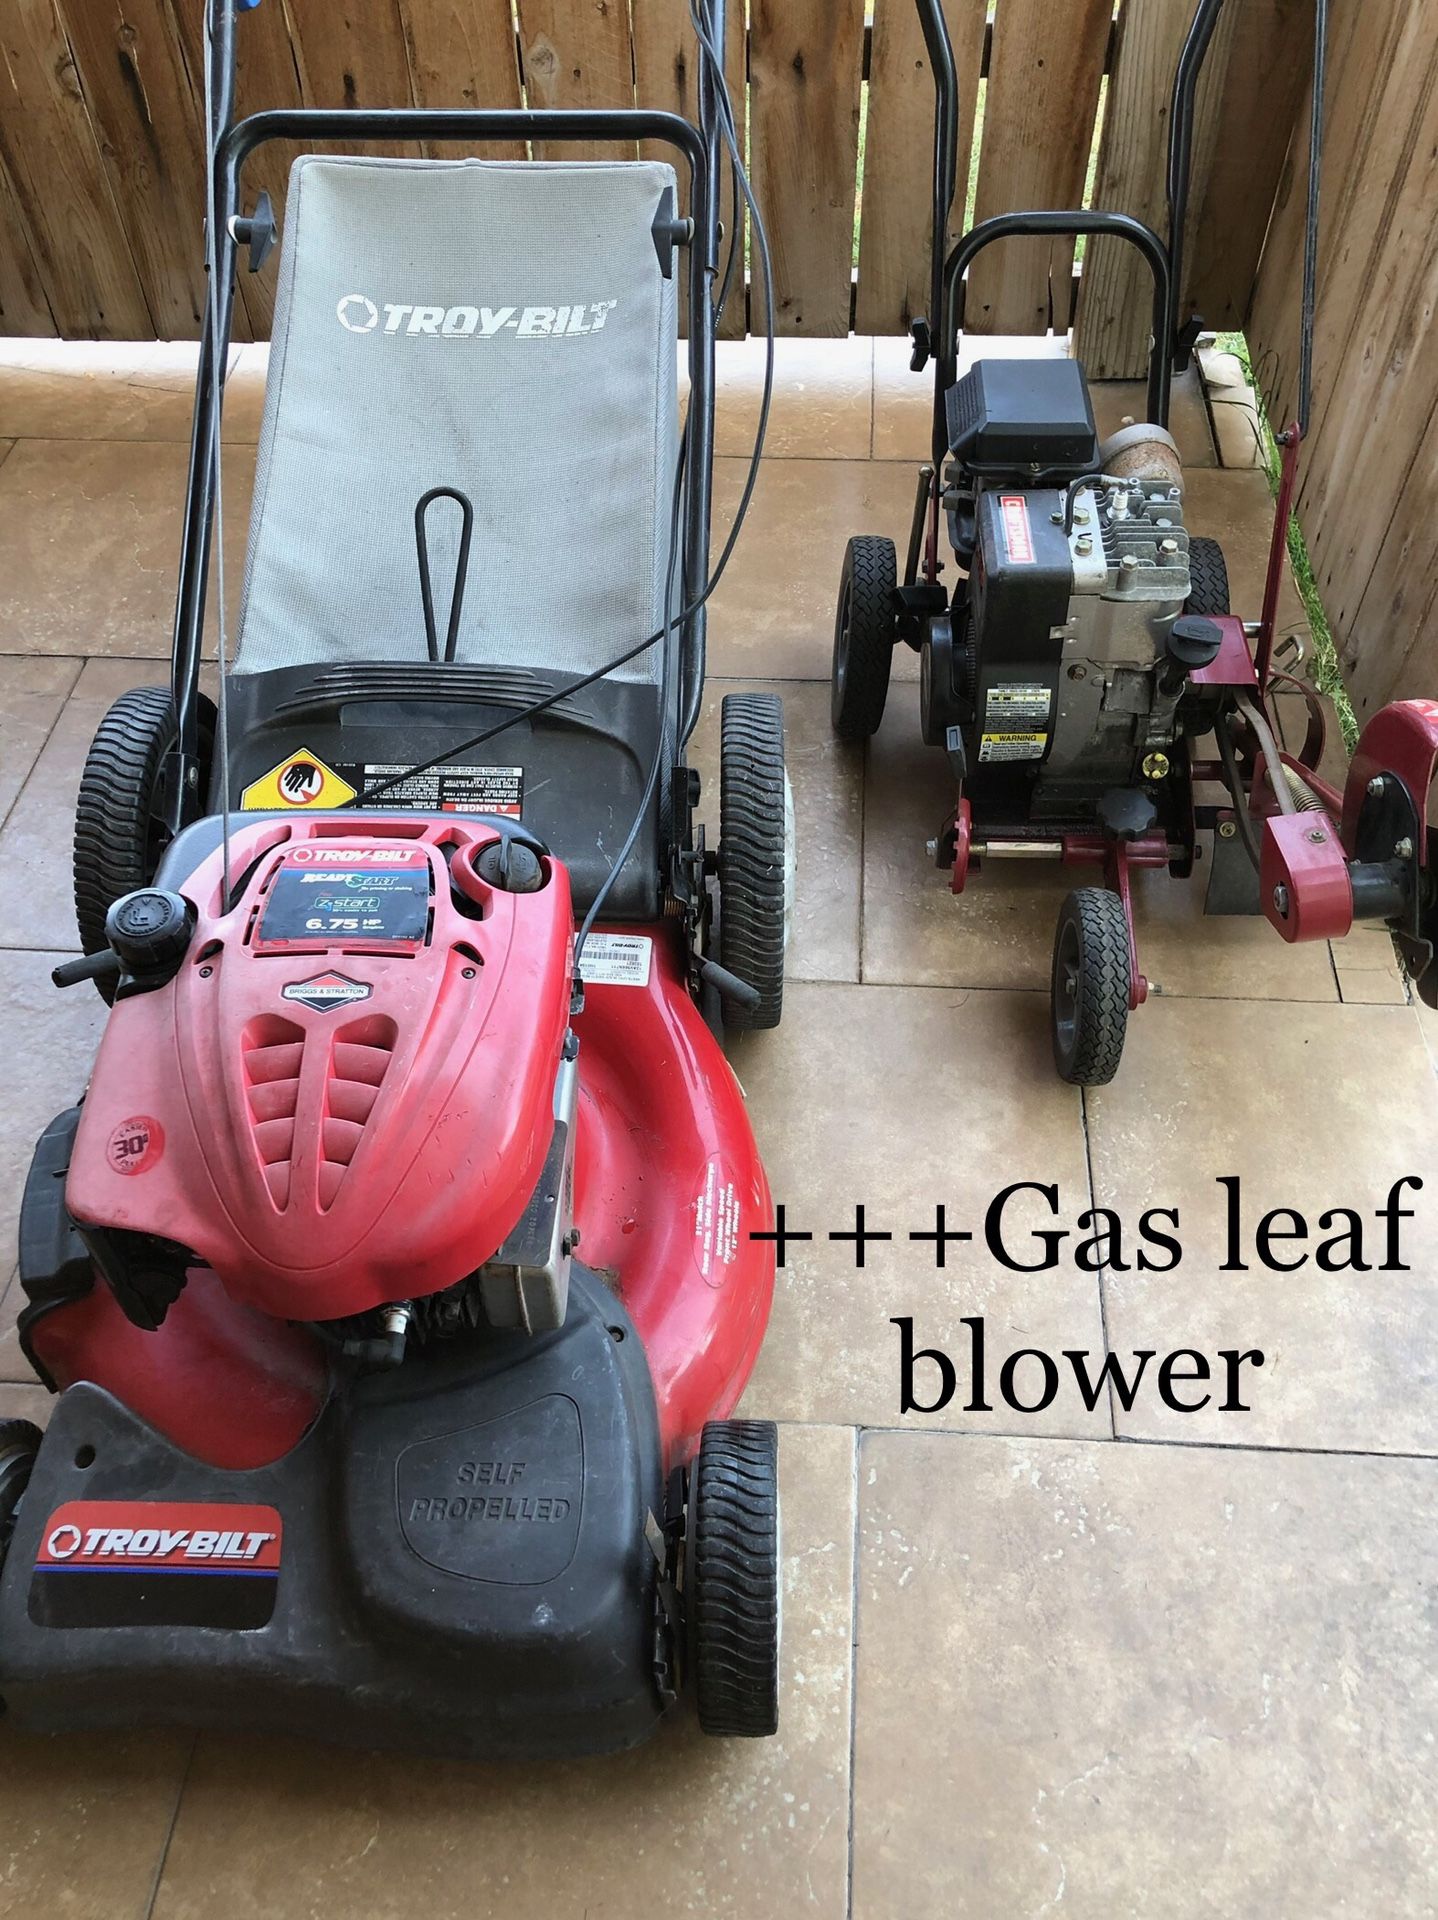 Grass cutter - gardening tools - leaf blower - mower - landscaping